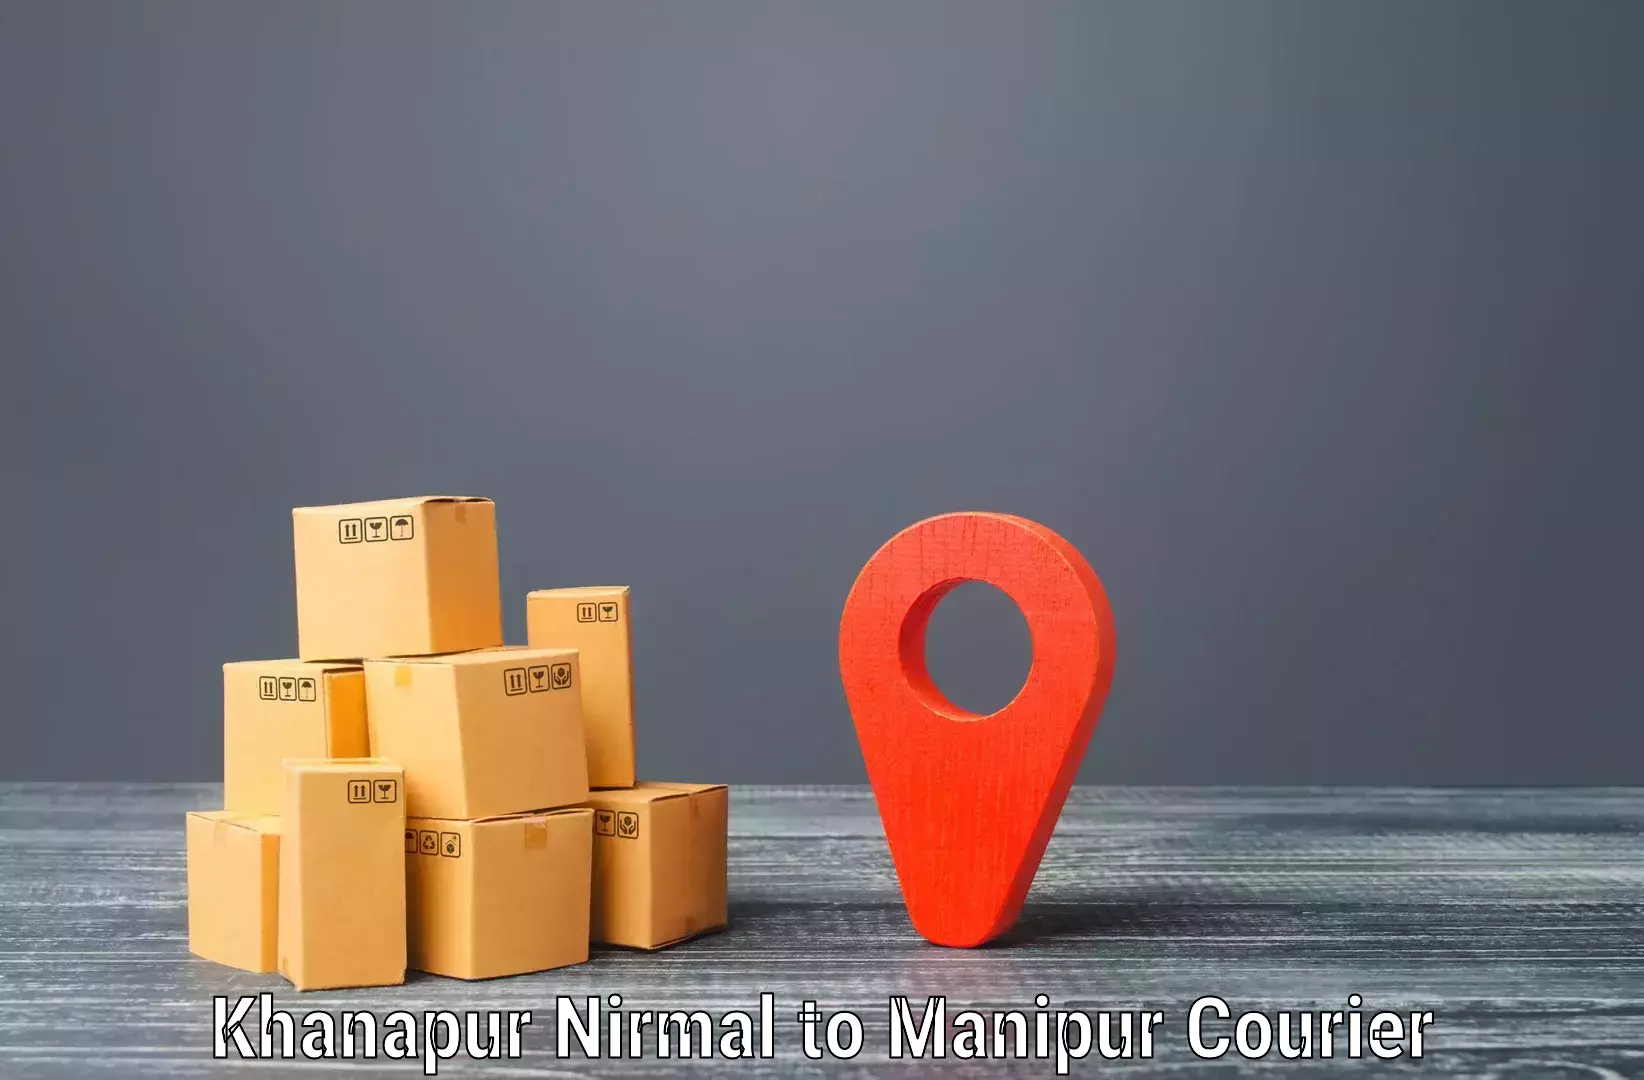 High-performance logistics Khanapur Nirmal to Chandel